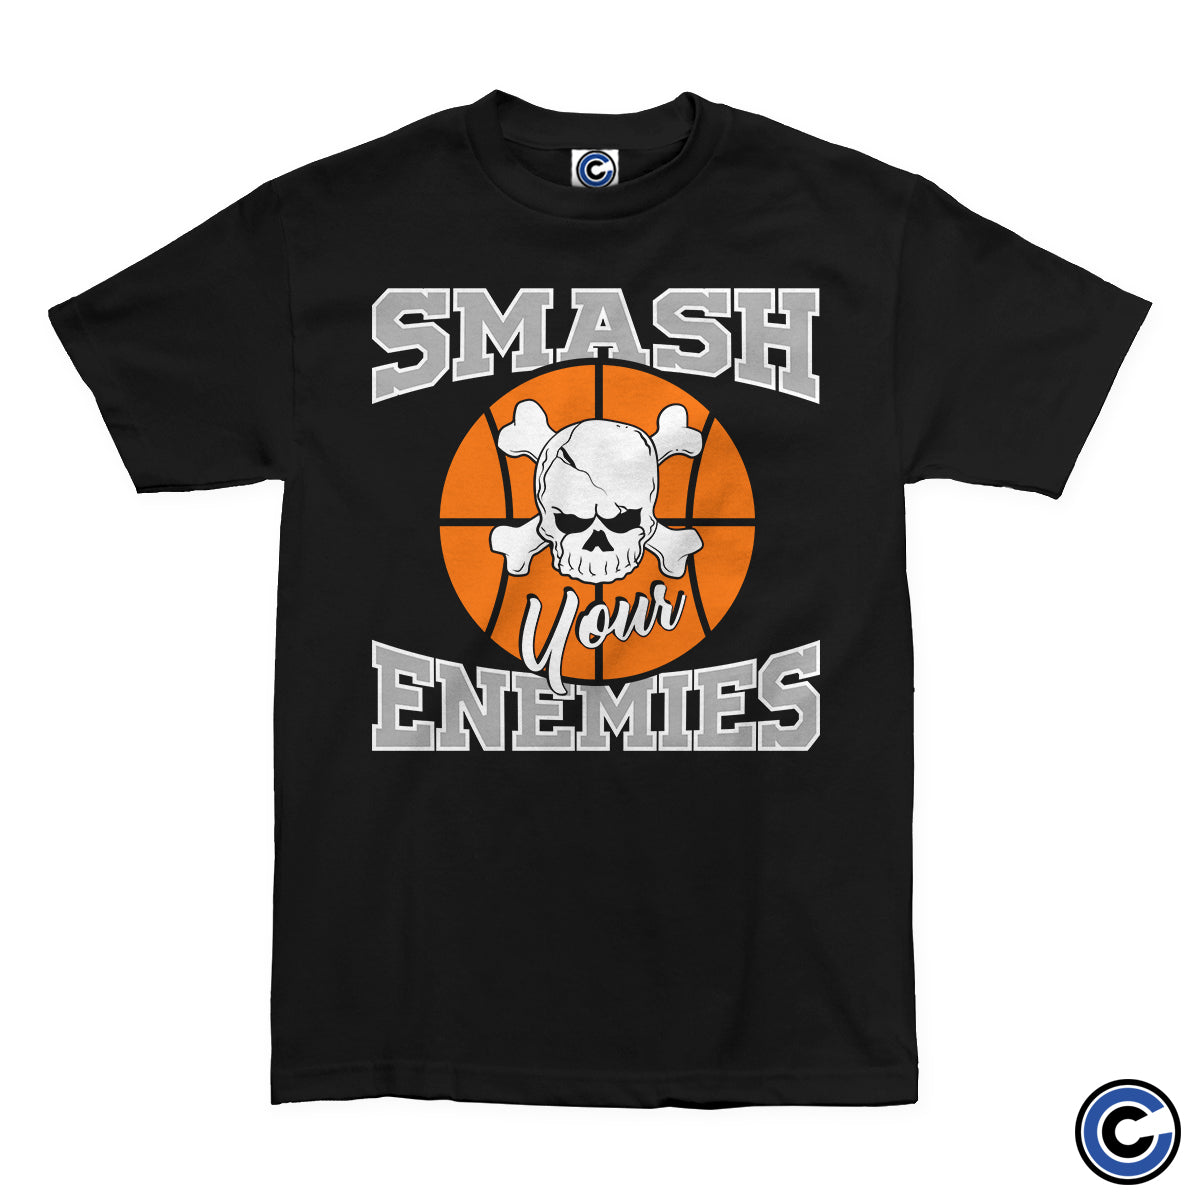 Smash Your Enemies "Skull and Crossbones" Shirt